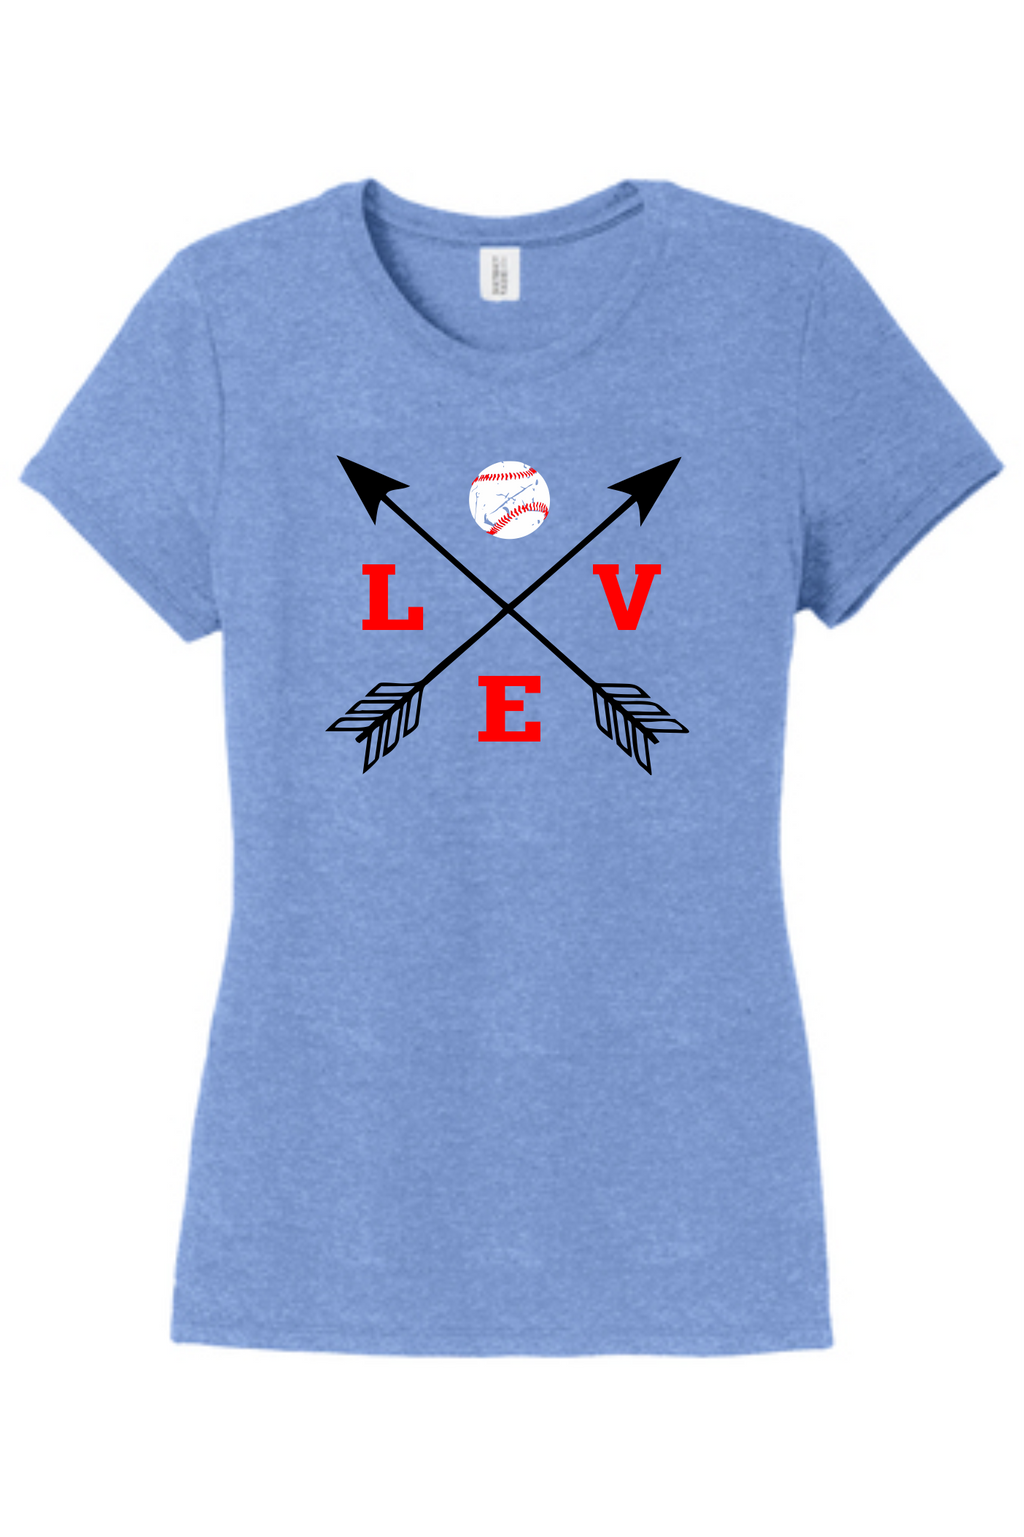 Love Baseball Arrows